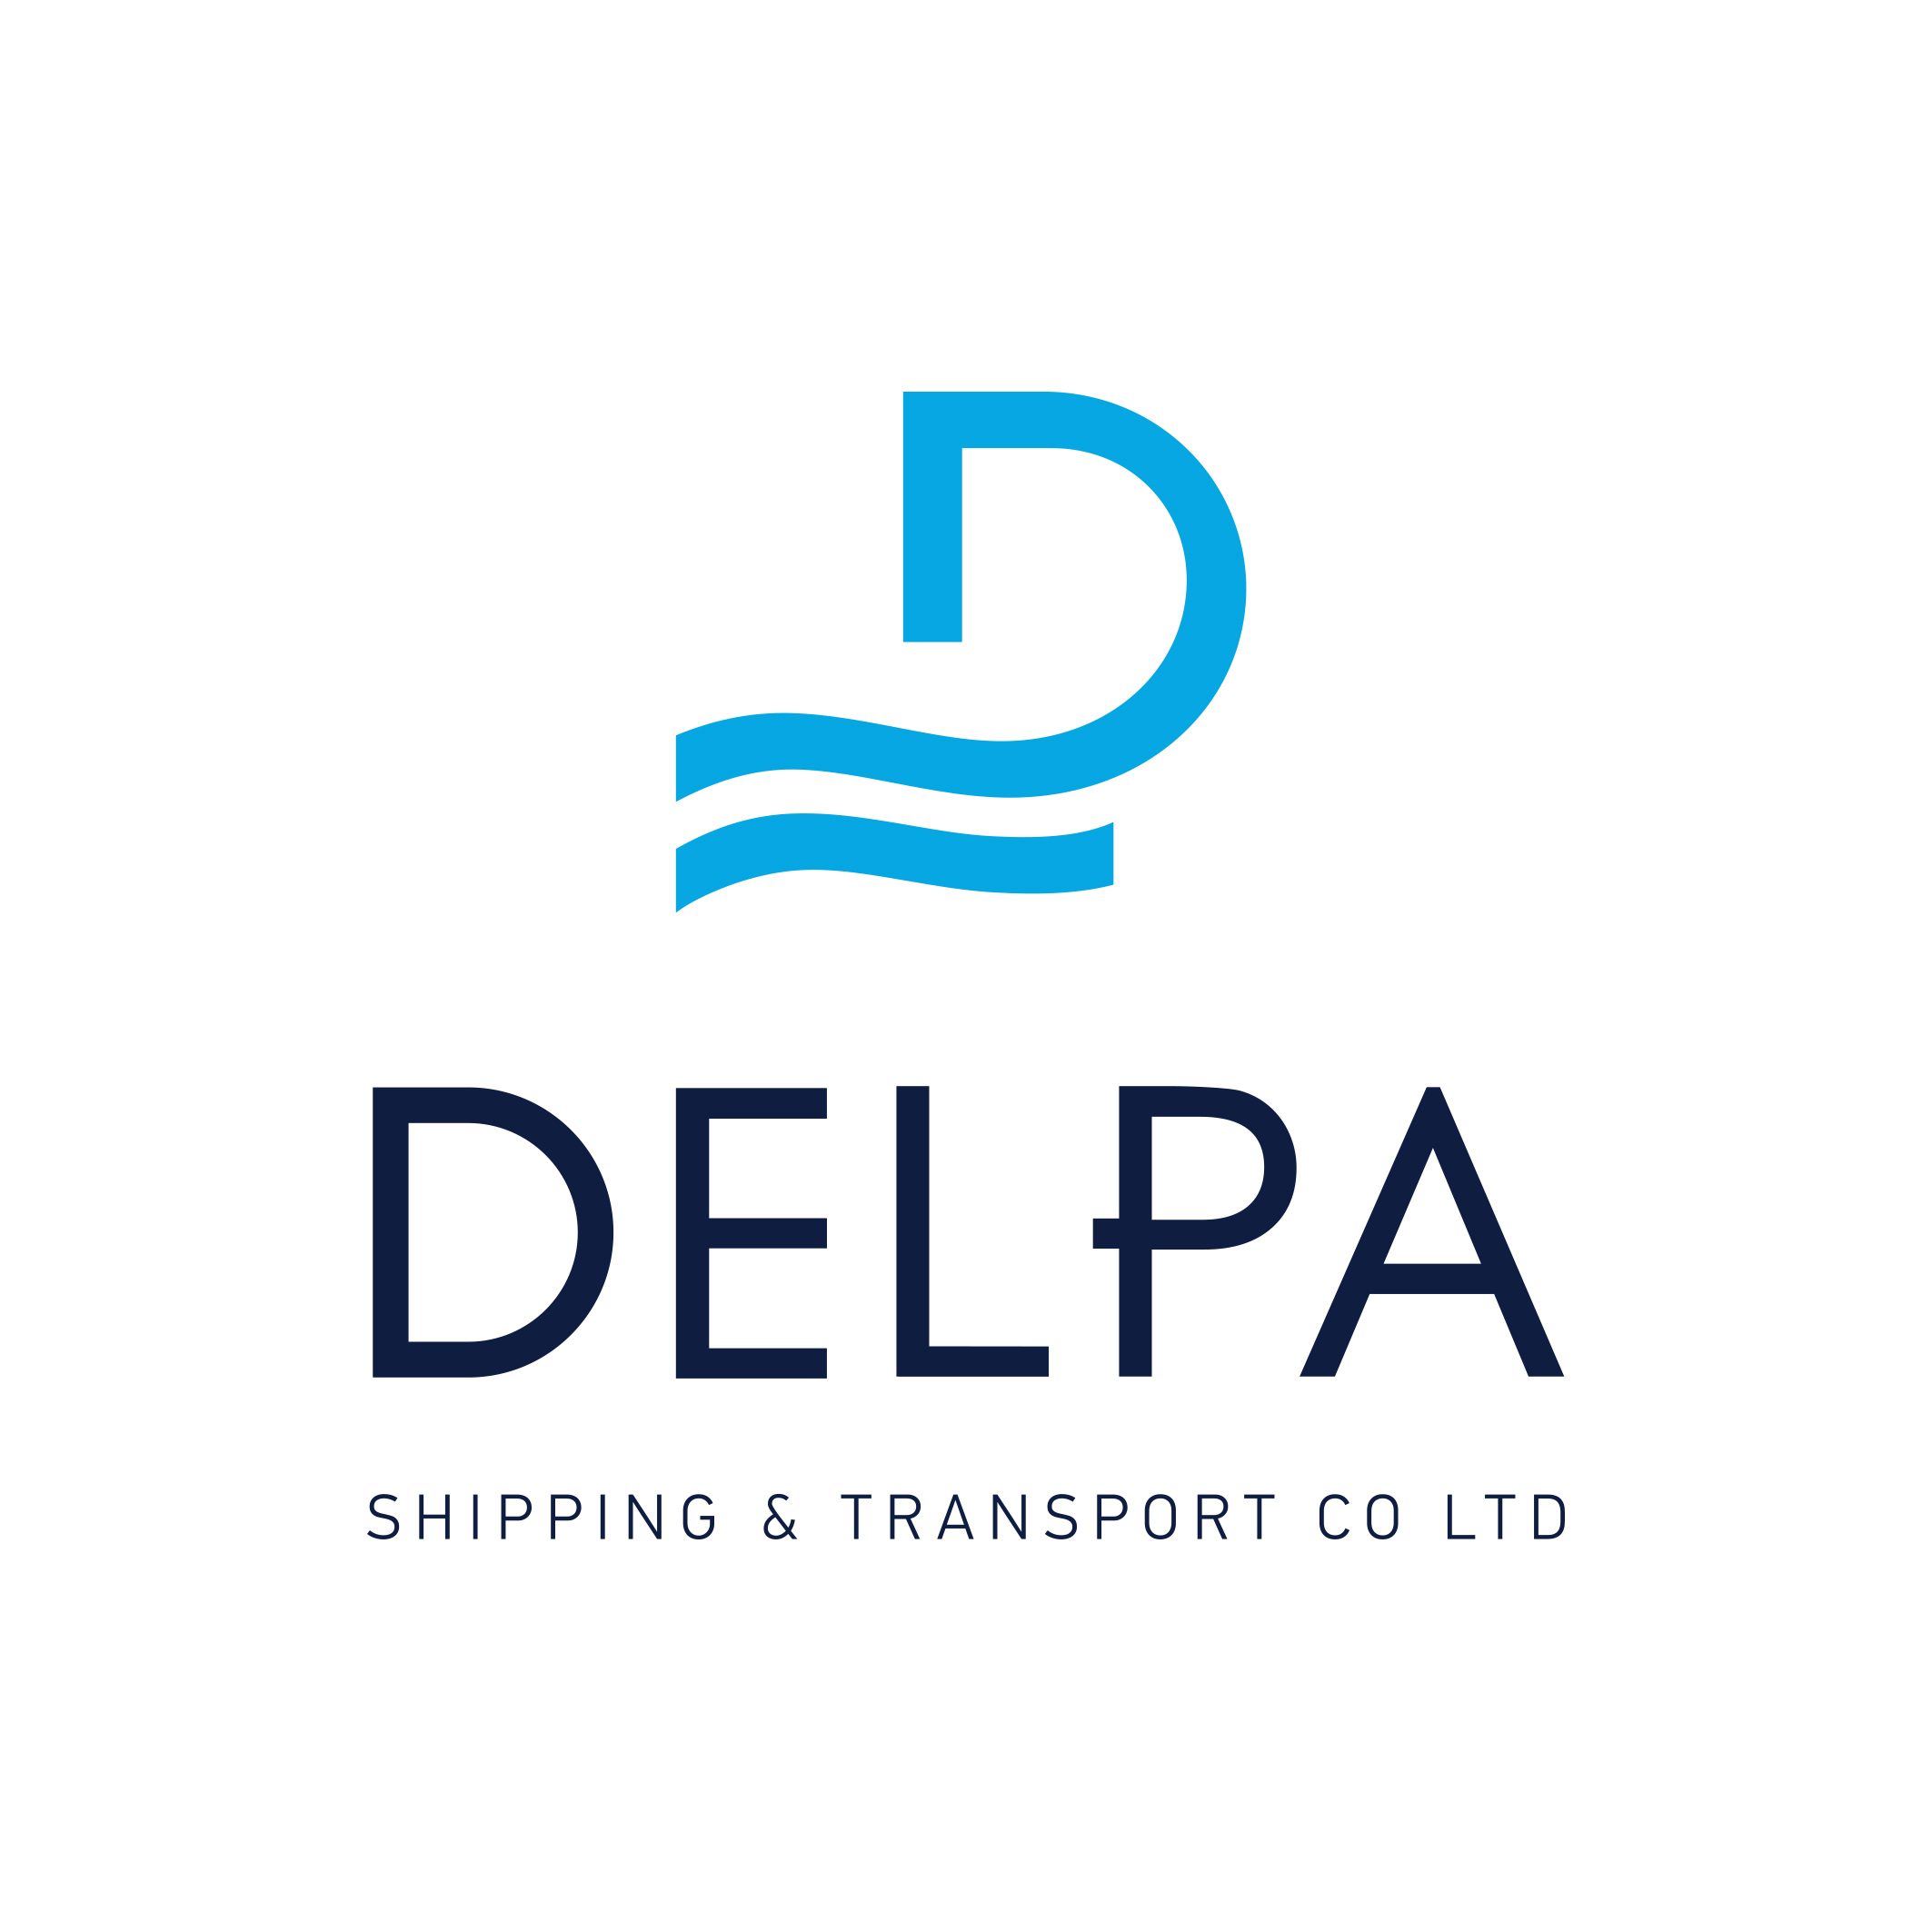 Delpa Shipping & Transport Co. Ltd.